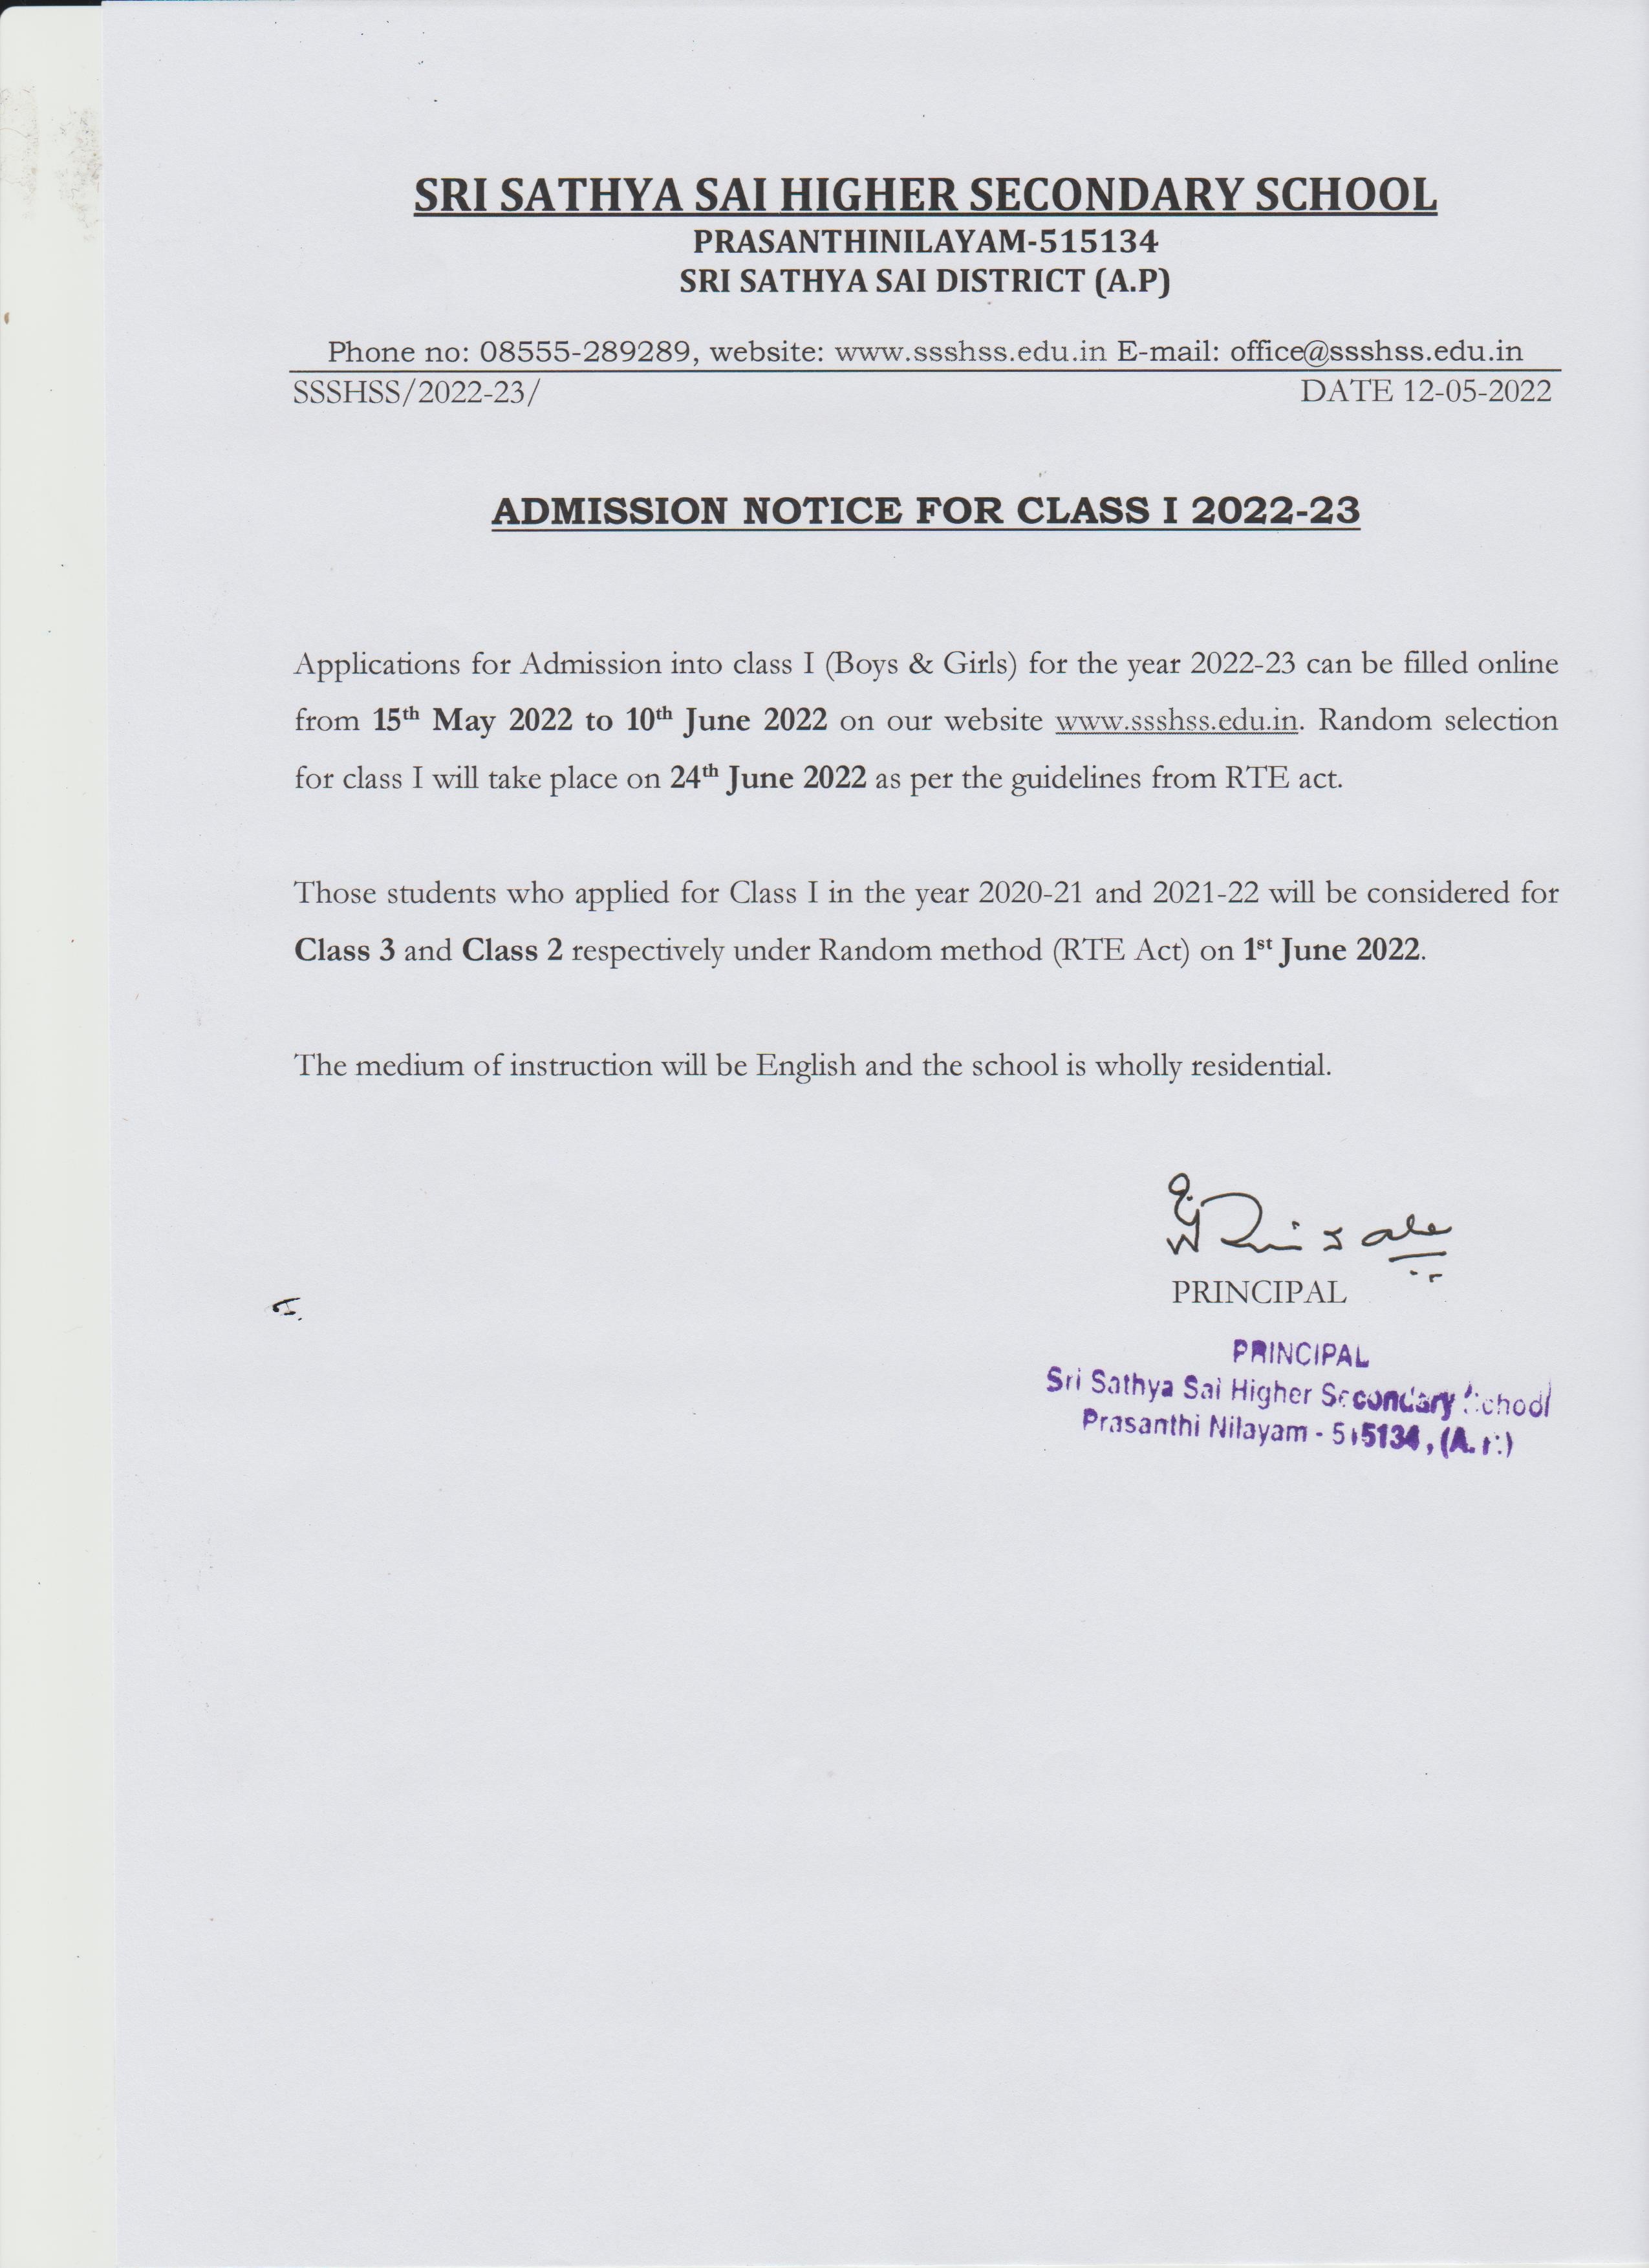 SSSHSS Admission notice Class 1 2022 23